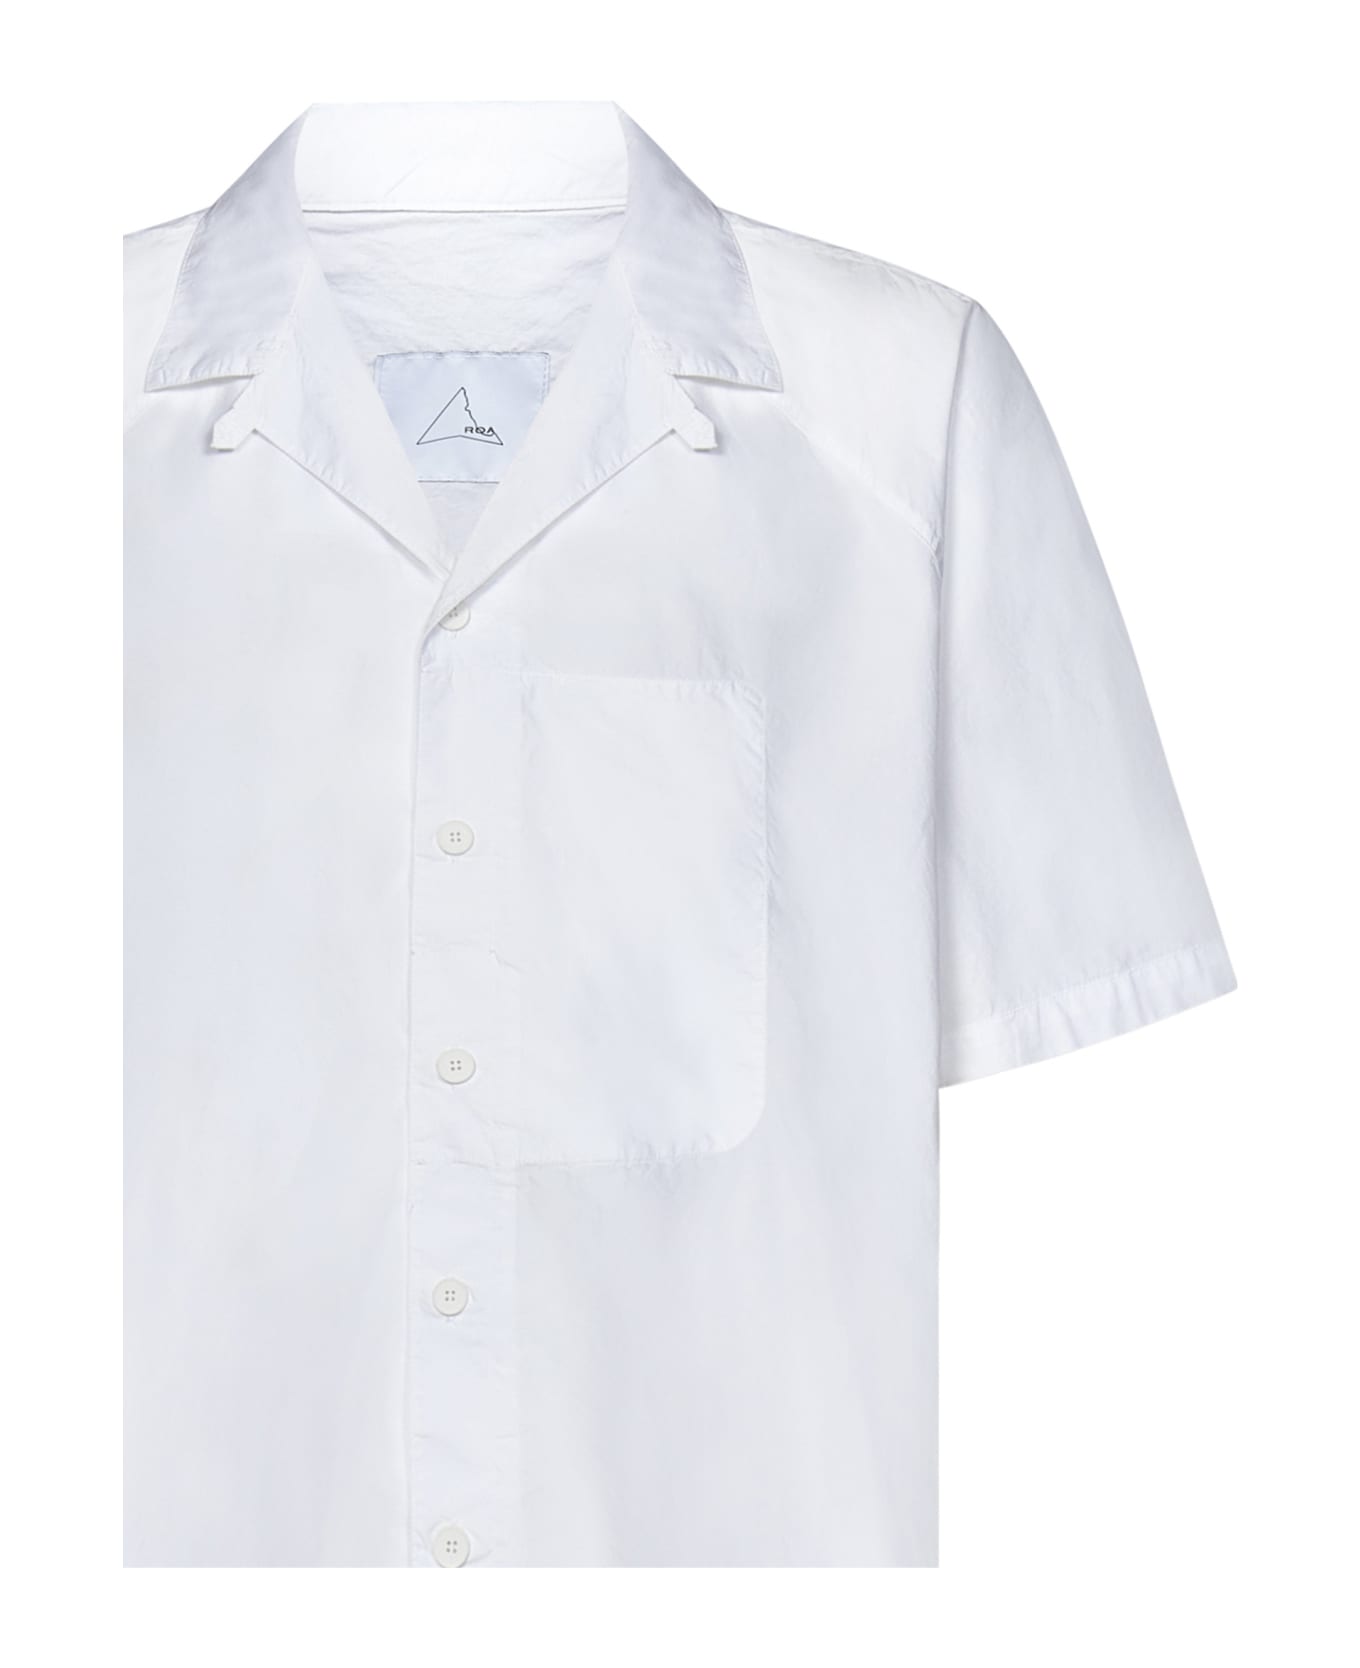 ROA Camp Shirt - White シャツ